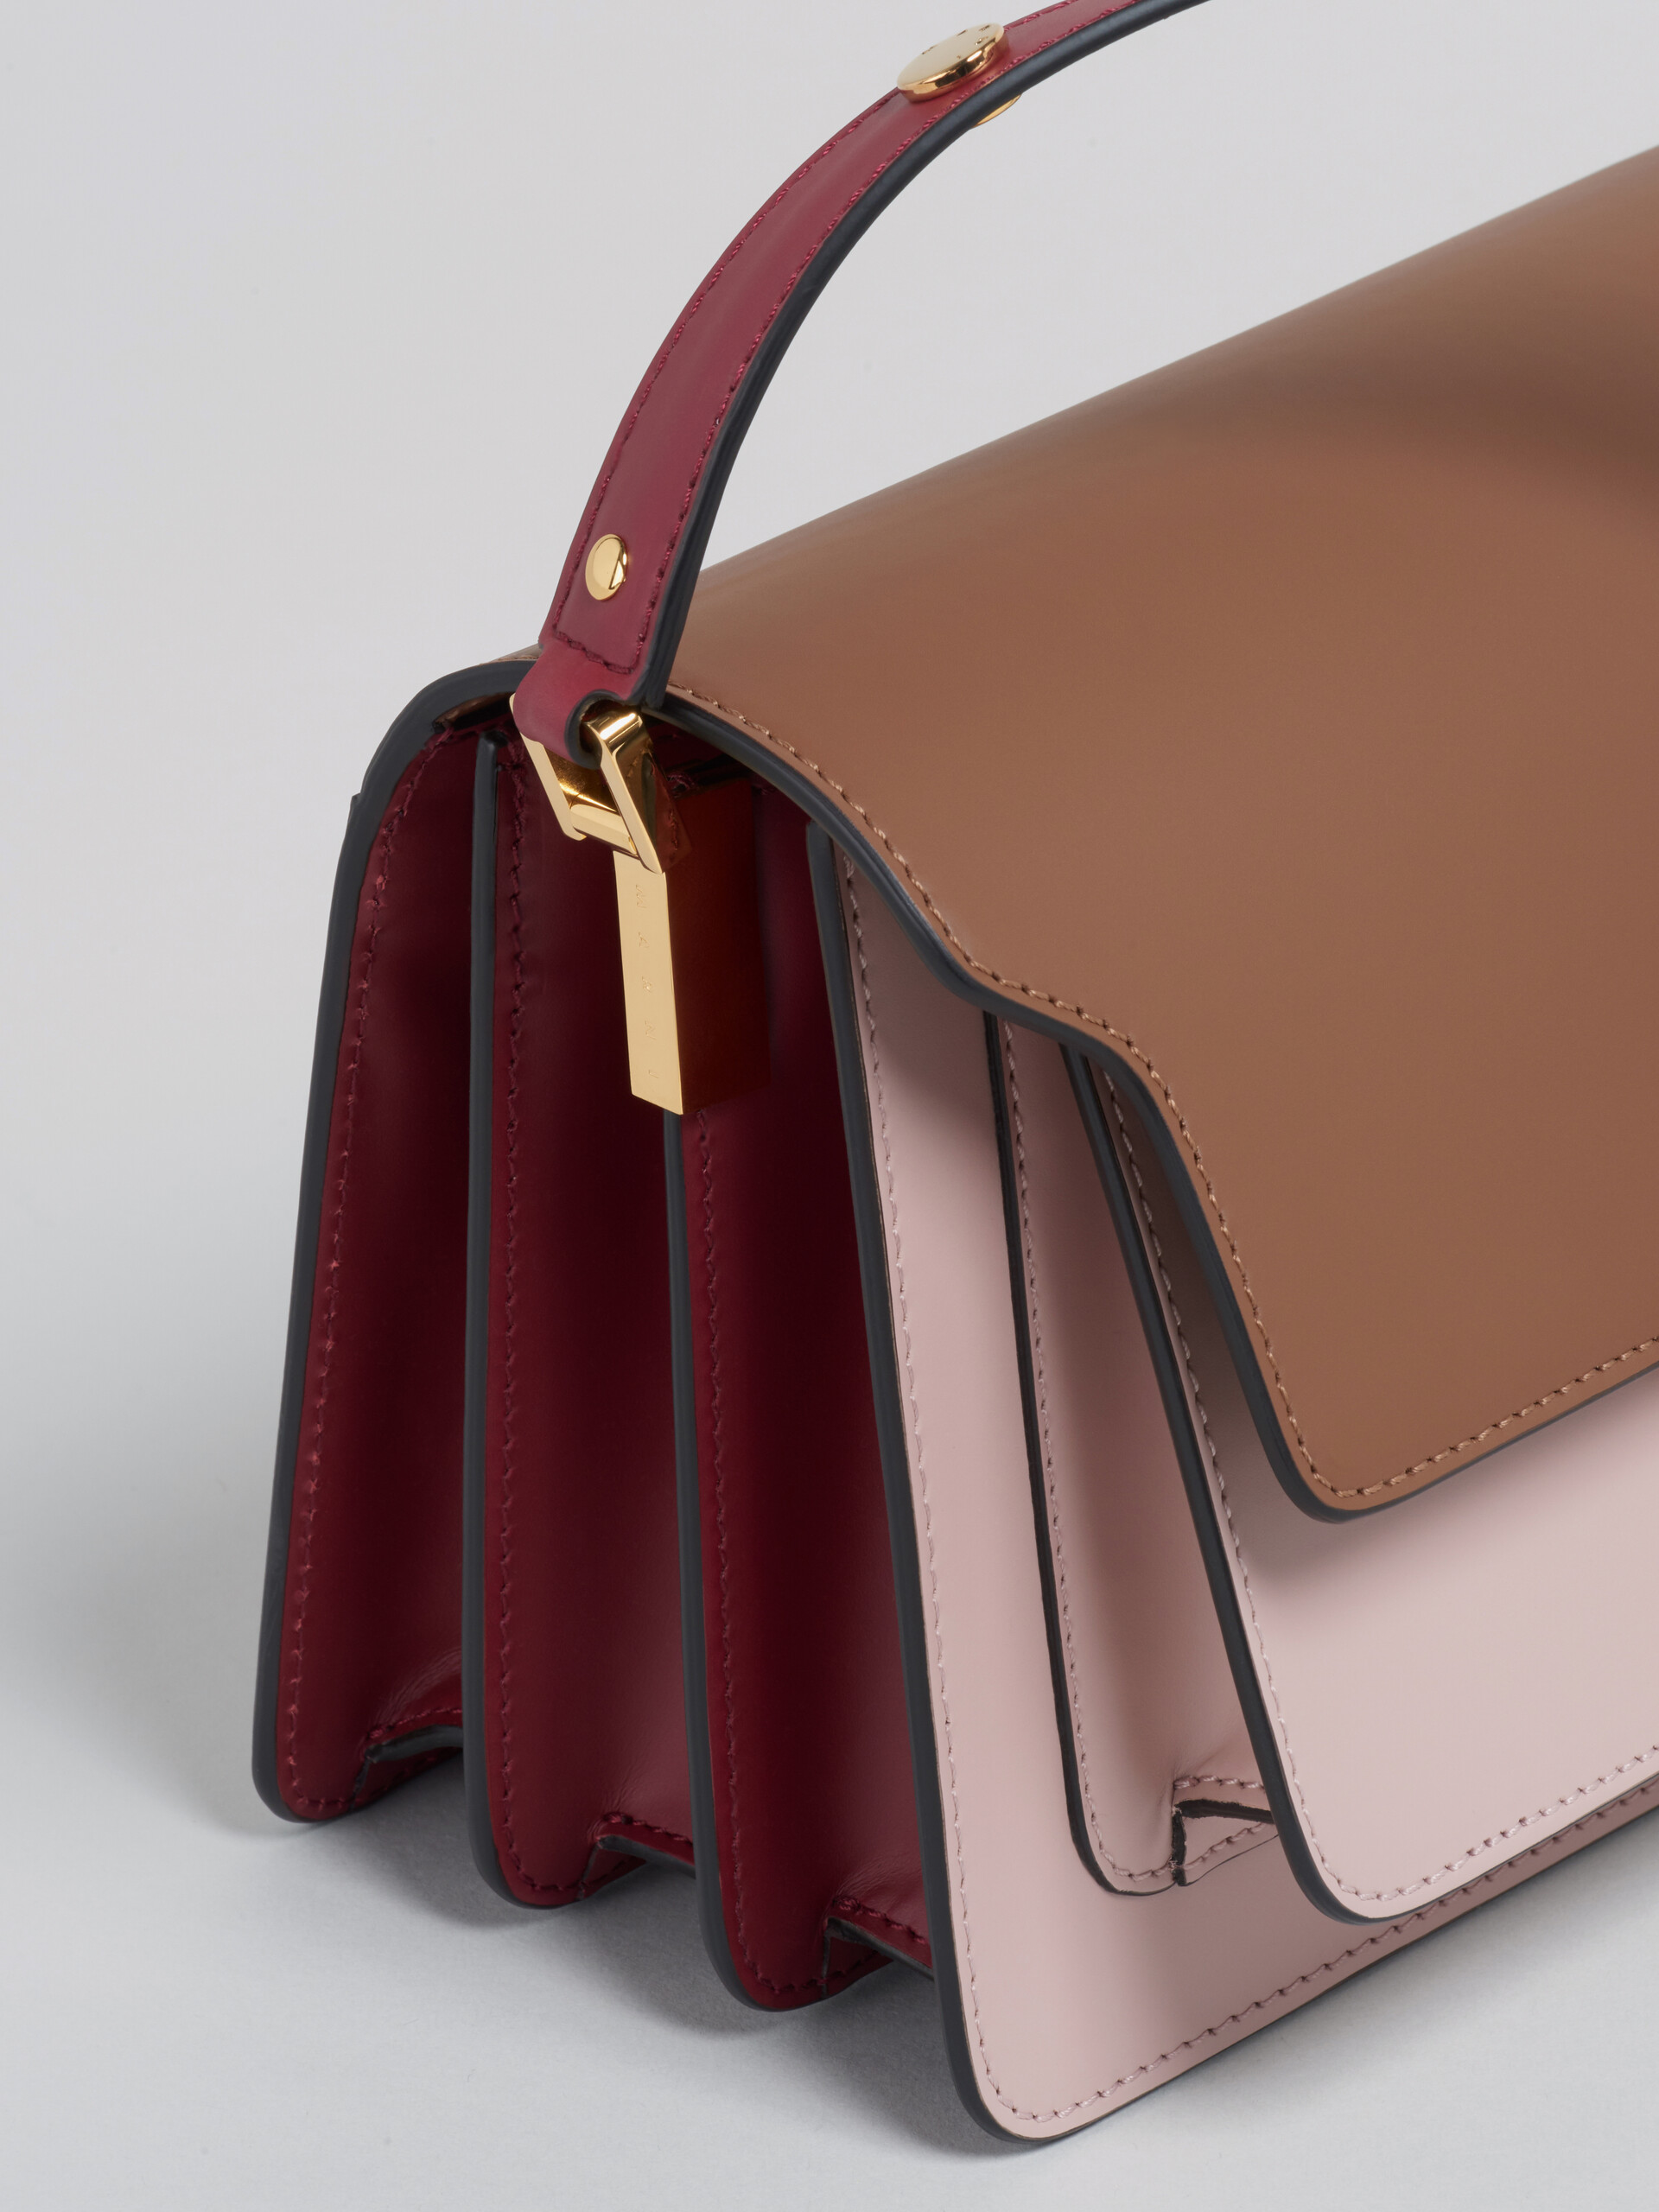 TRUNK medium bag in brown pink and red leather - Shoulder Bag - Image 4